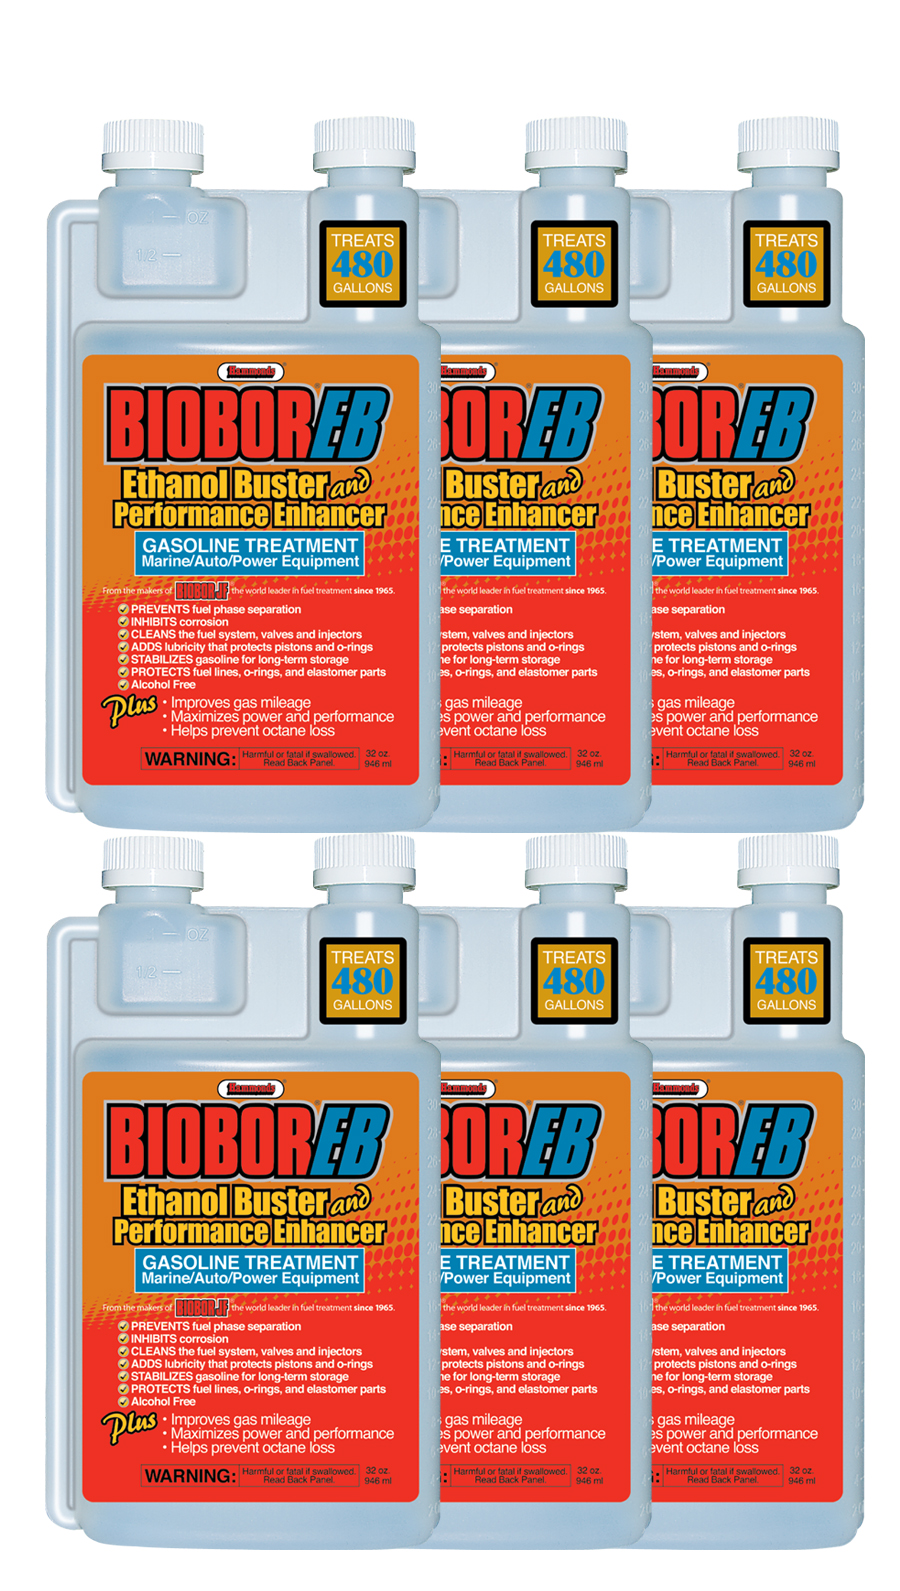 Biobor EB 32 oz. (6 Pack) Ethanol Buster and Performance Enhancer Image